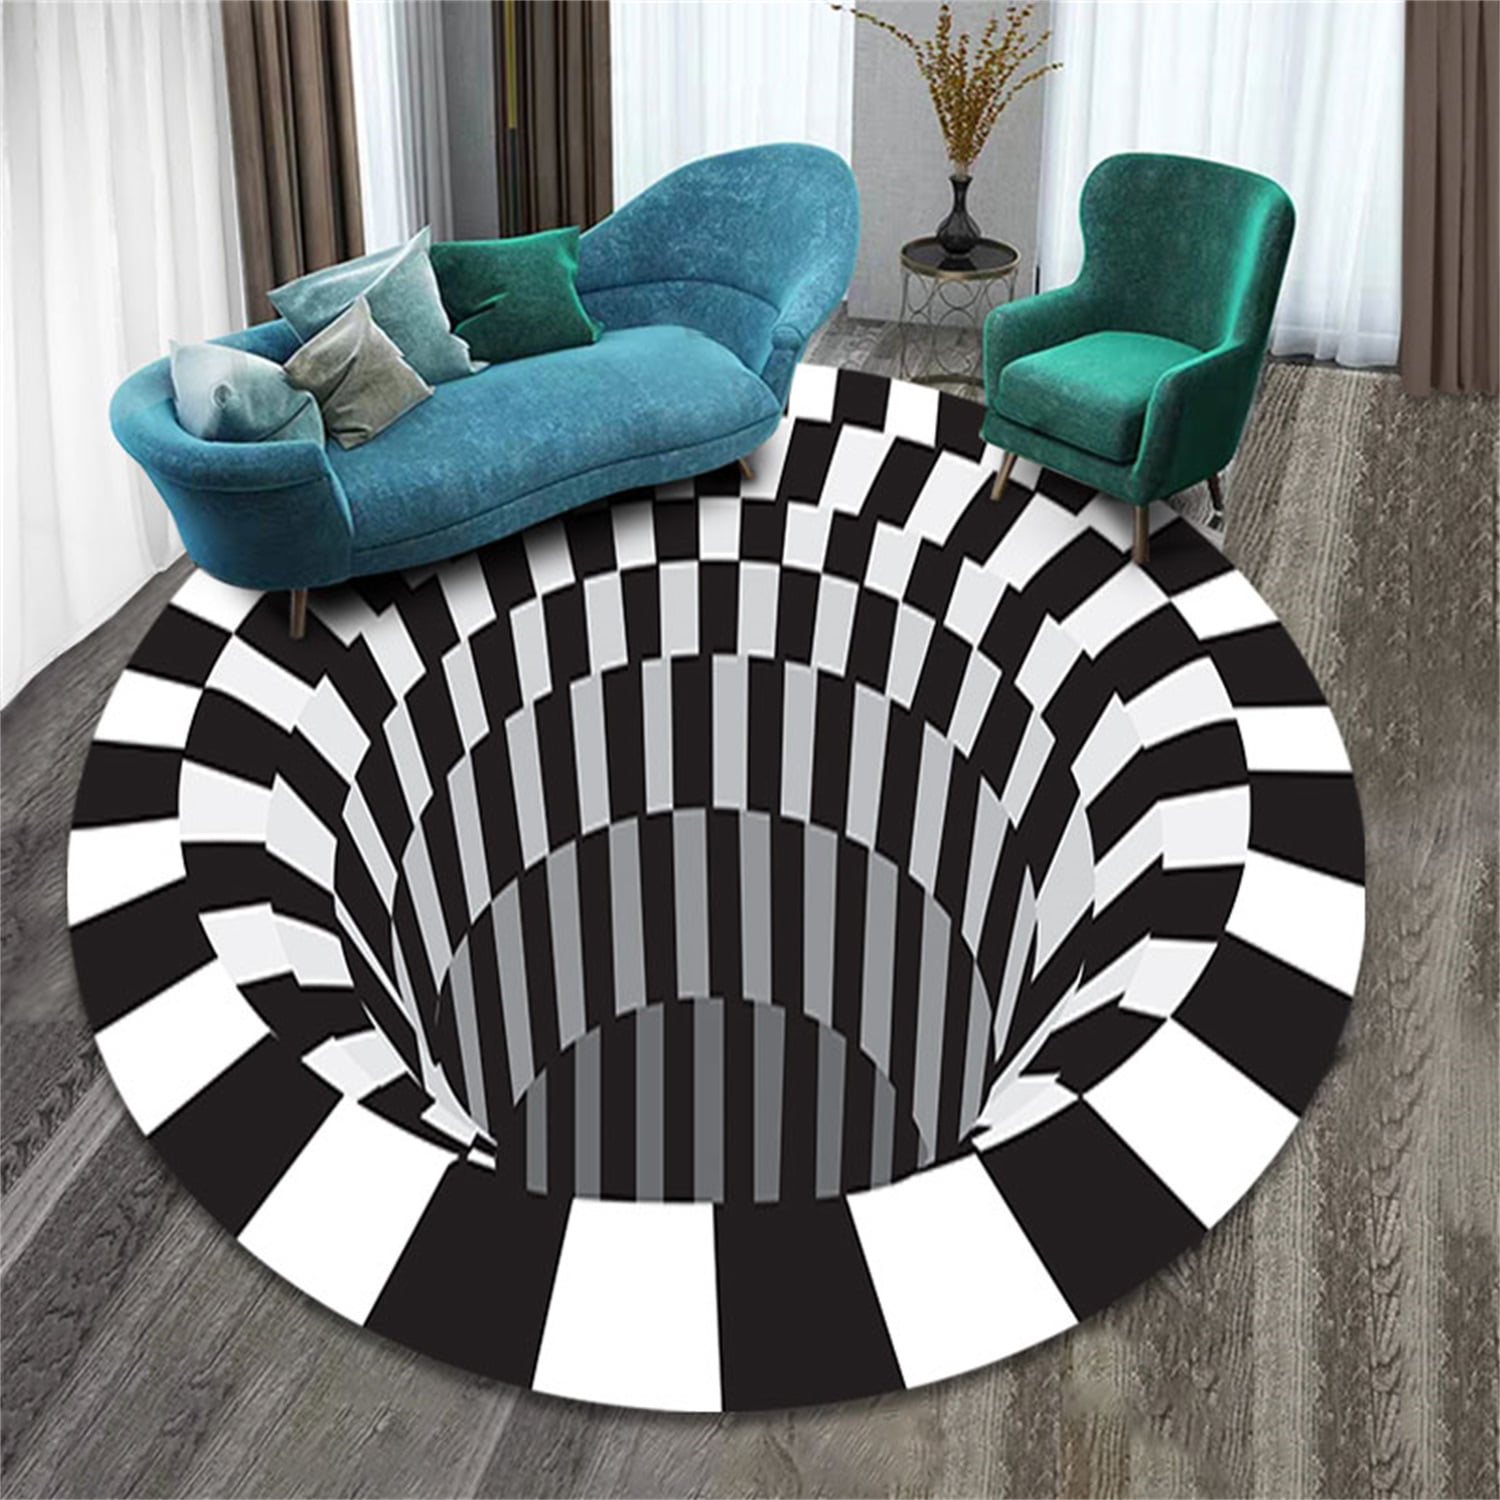 HD 3D Stereo Thriller Corridor Aisle Non-Slip Living Room Bedroom Bedside Entry Carpet Color : A9, Size : 120x180cm